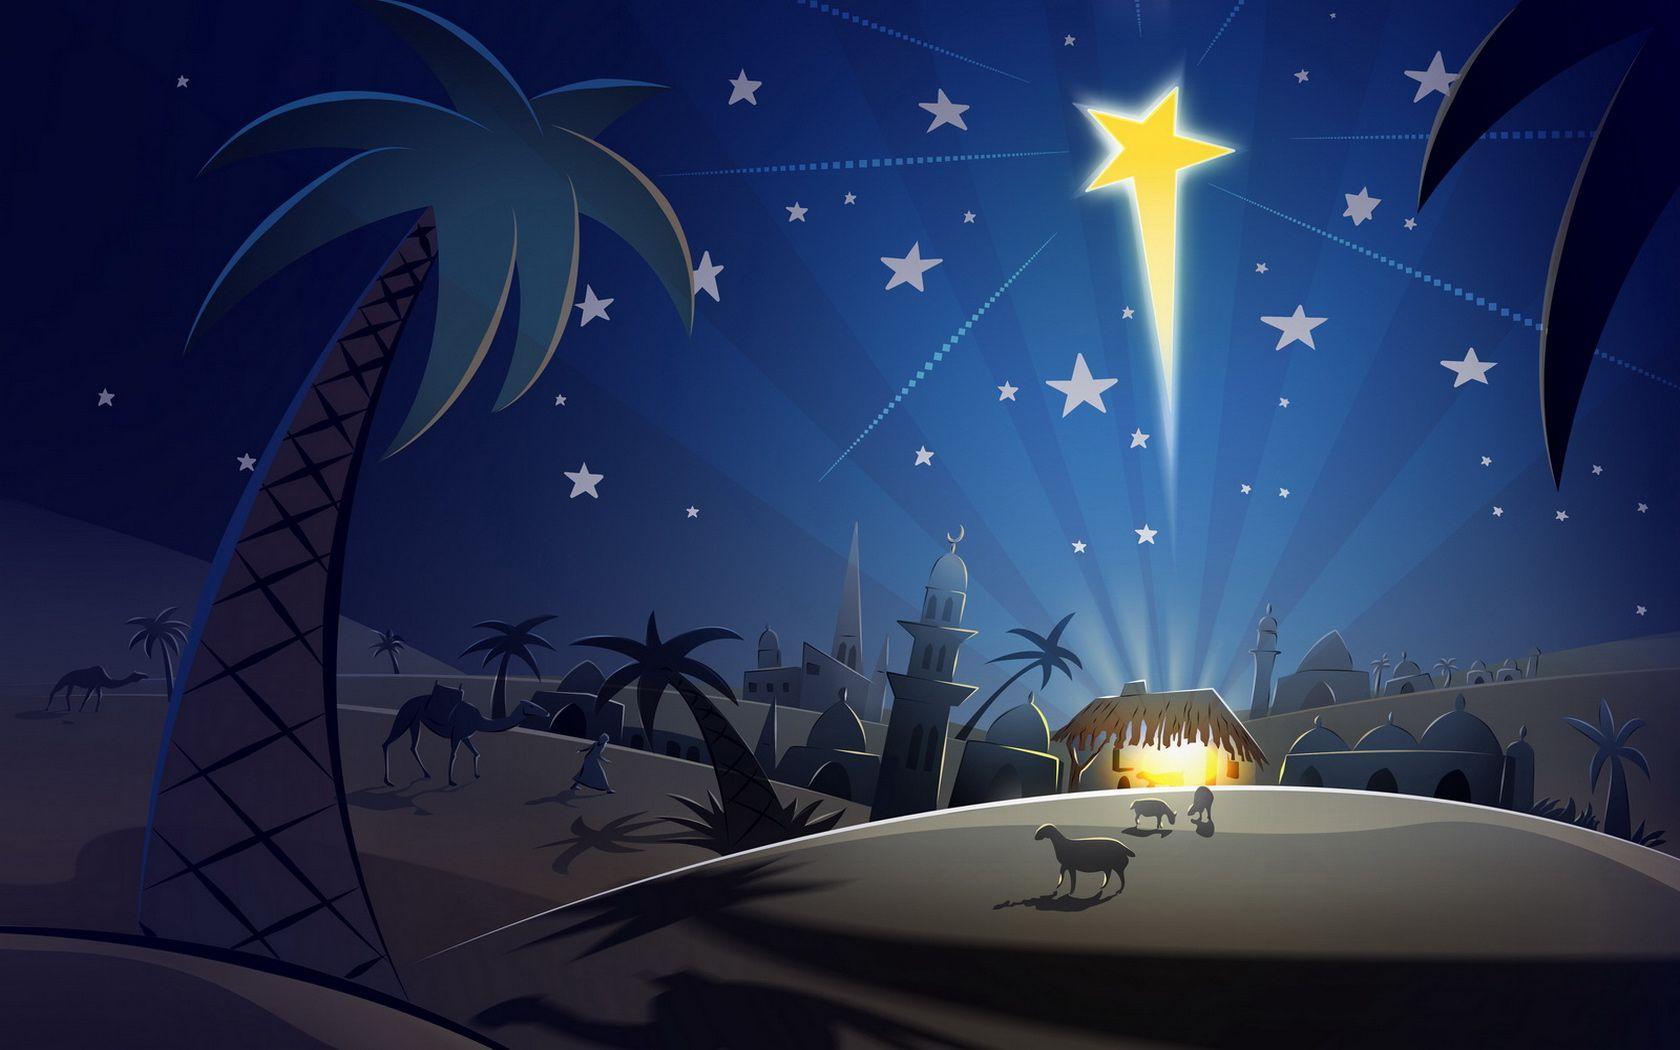 Over 250 CHRISTIAN WALLPAPERS! Jesus is born!. Christmas desktop, Christmas desktop wallpaper, Christmas jesus